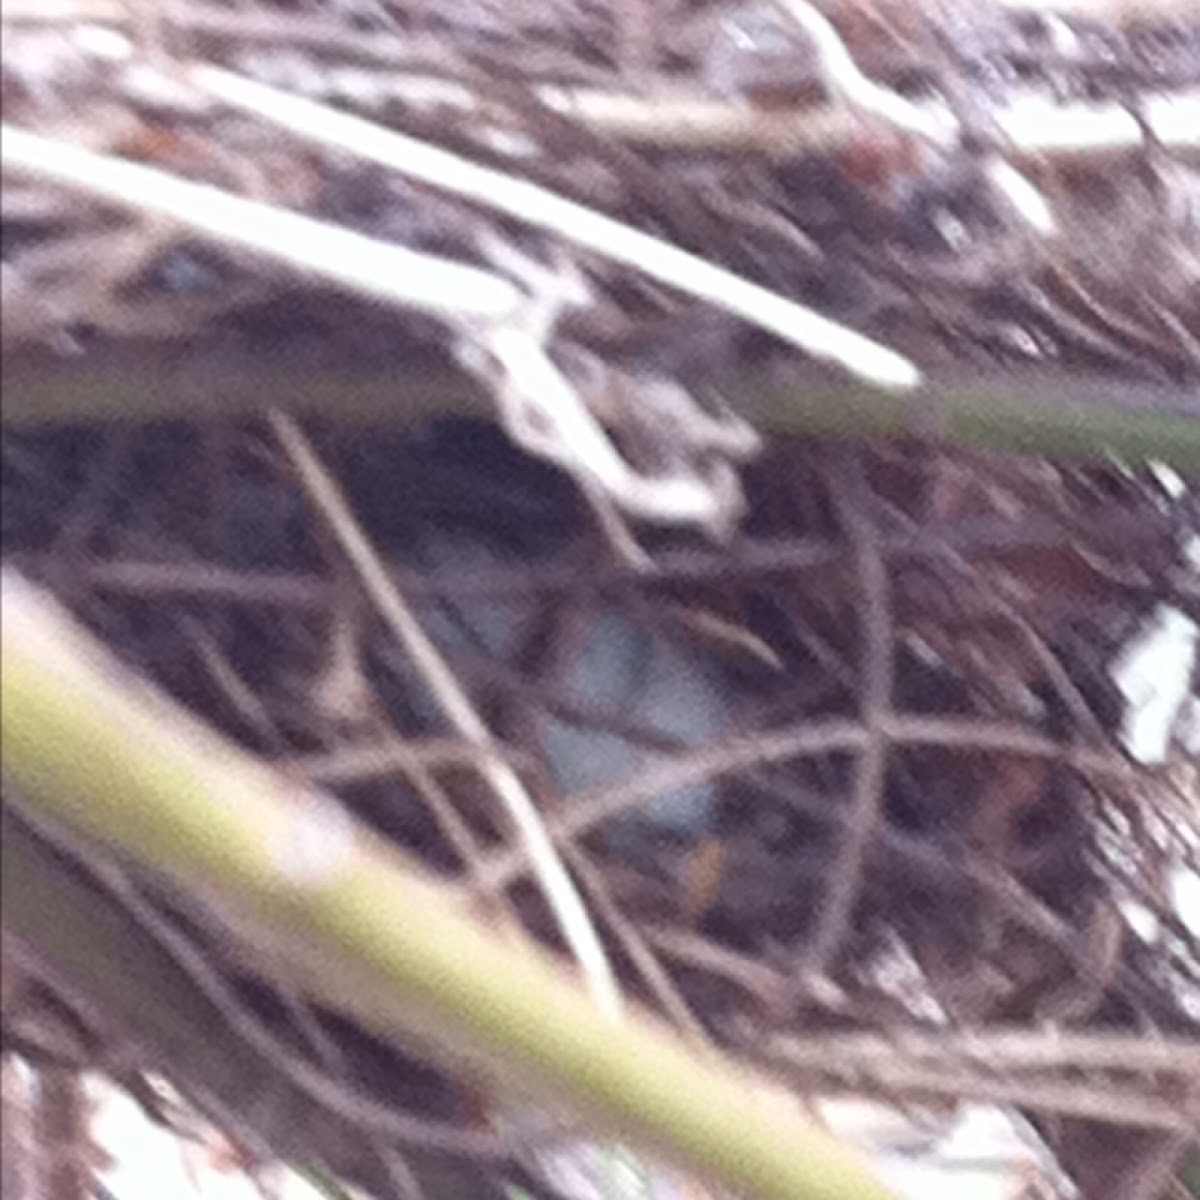 Chickadee or house sparrow egg